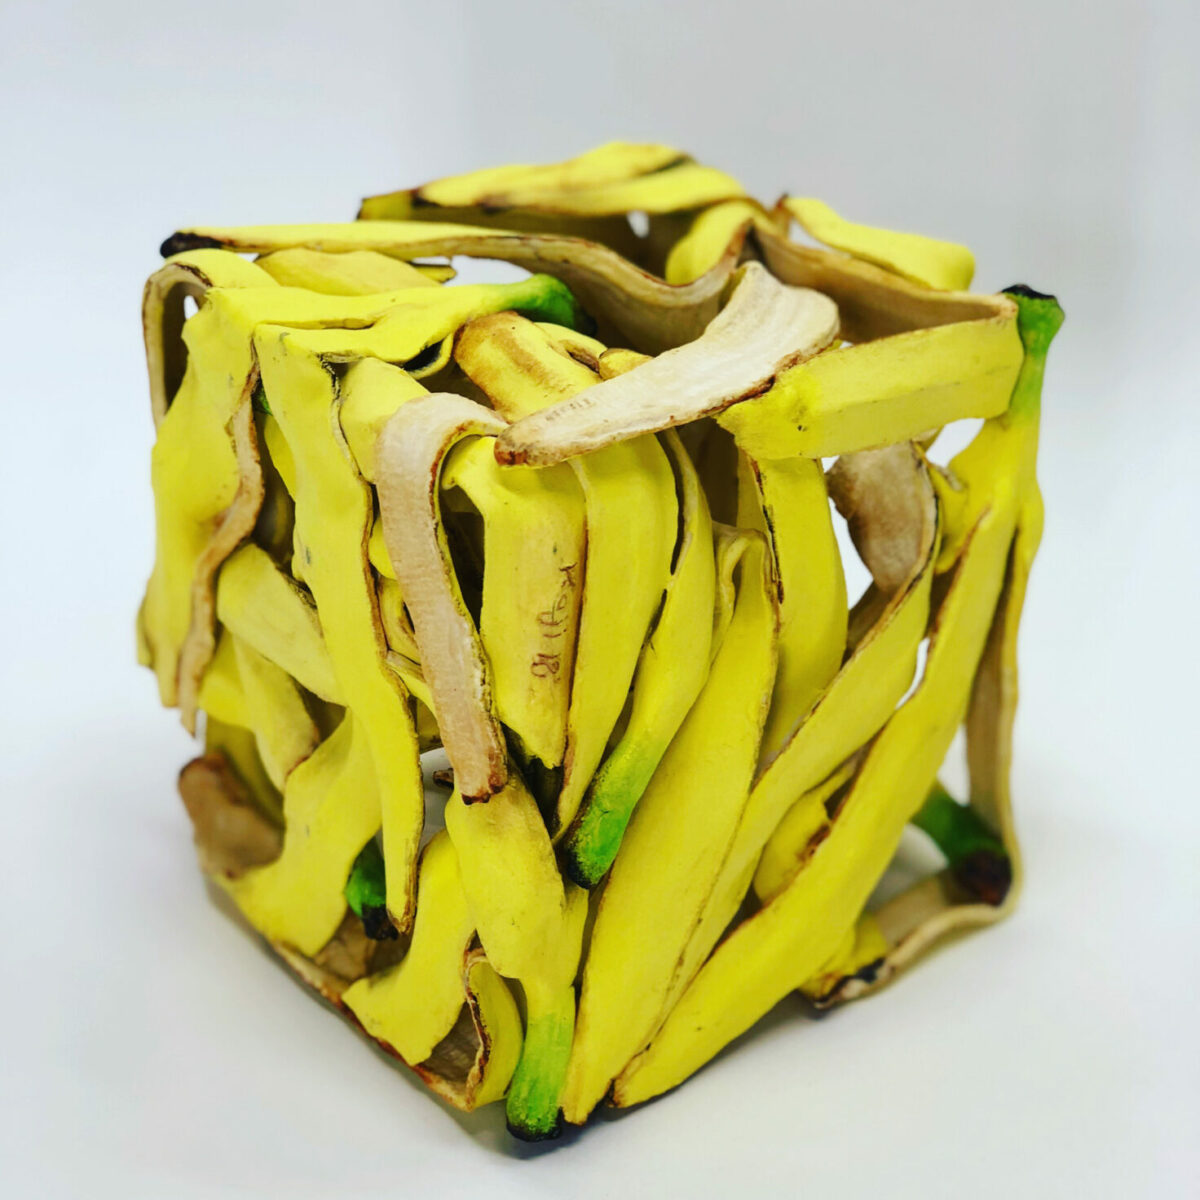 Surreal Bananas Amusing Ceramic Sculptures By Koji Kasatani 13